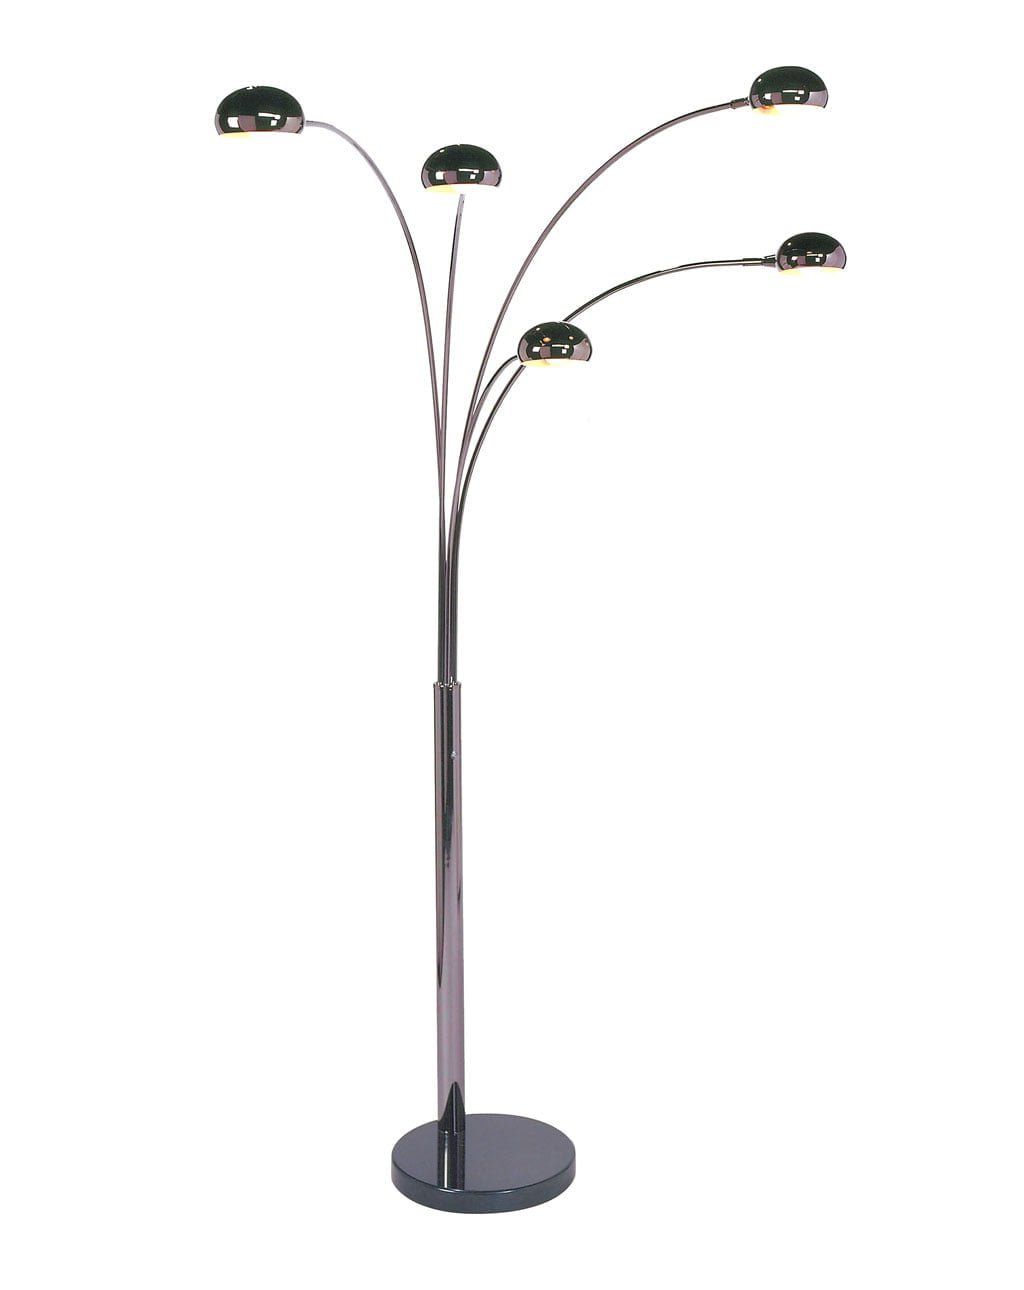 Mushroom 5 Light Arc Floor Lamp – 5 Arm Arc Lamp | Nova Of California With 5 Light Arc Floor Lamps (View 2 of 20)